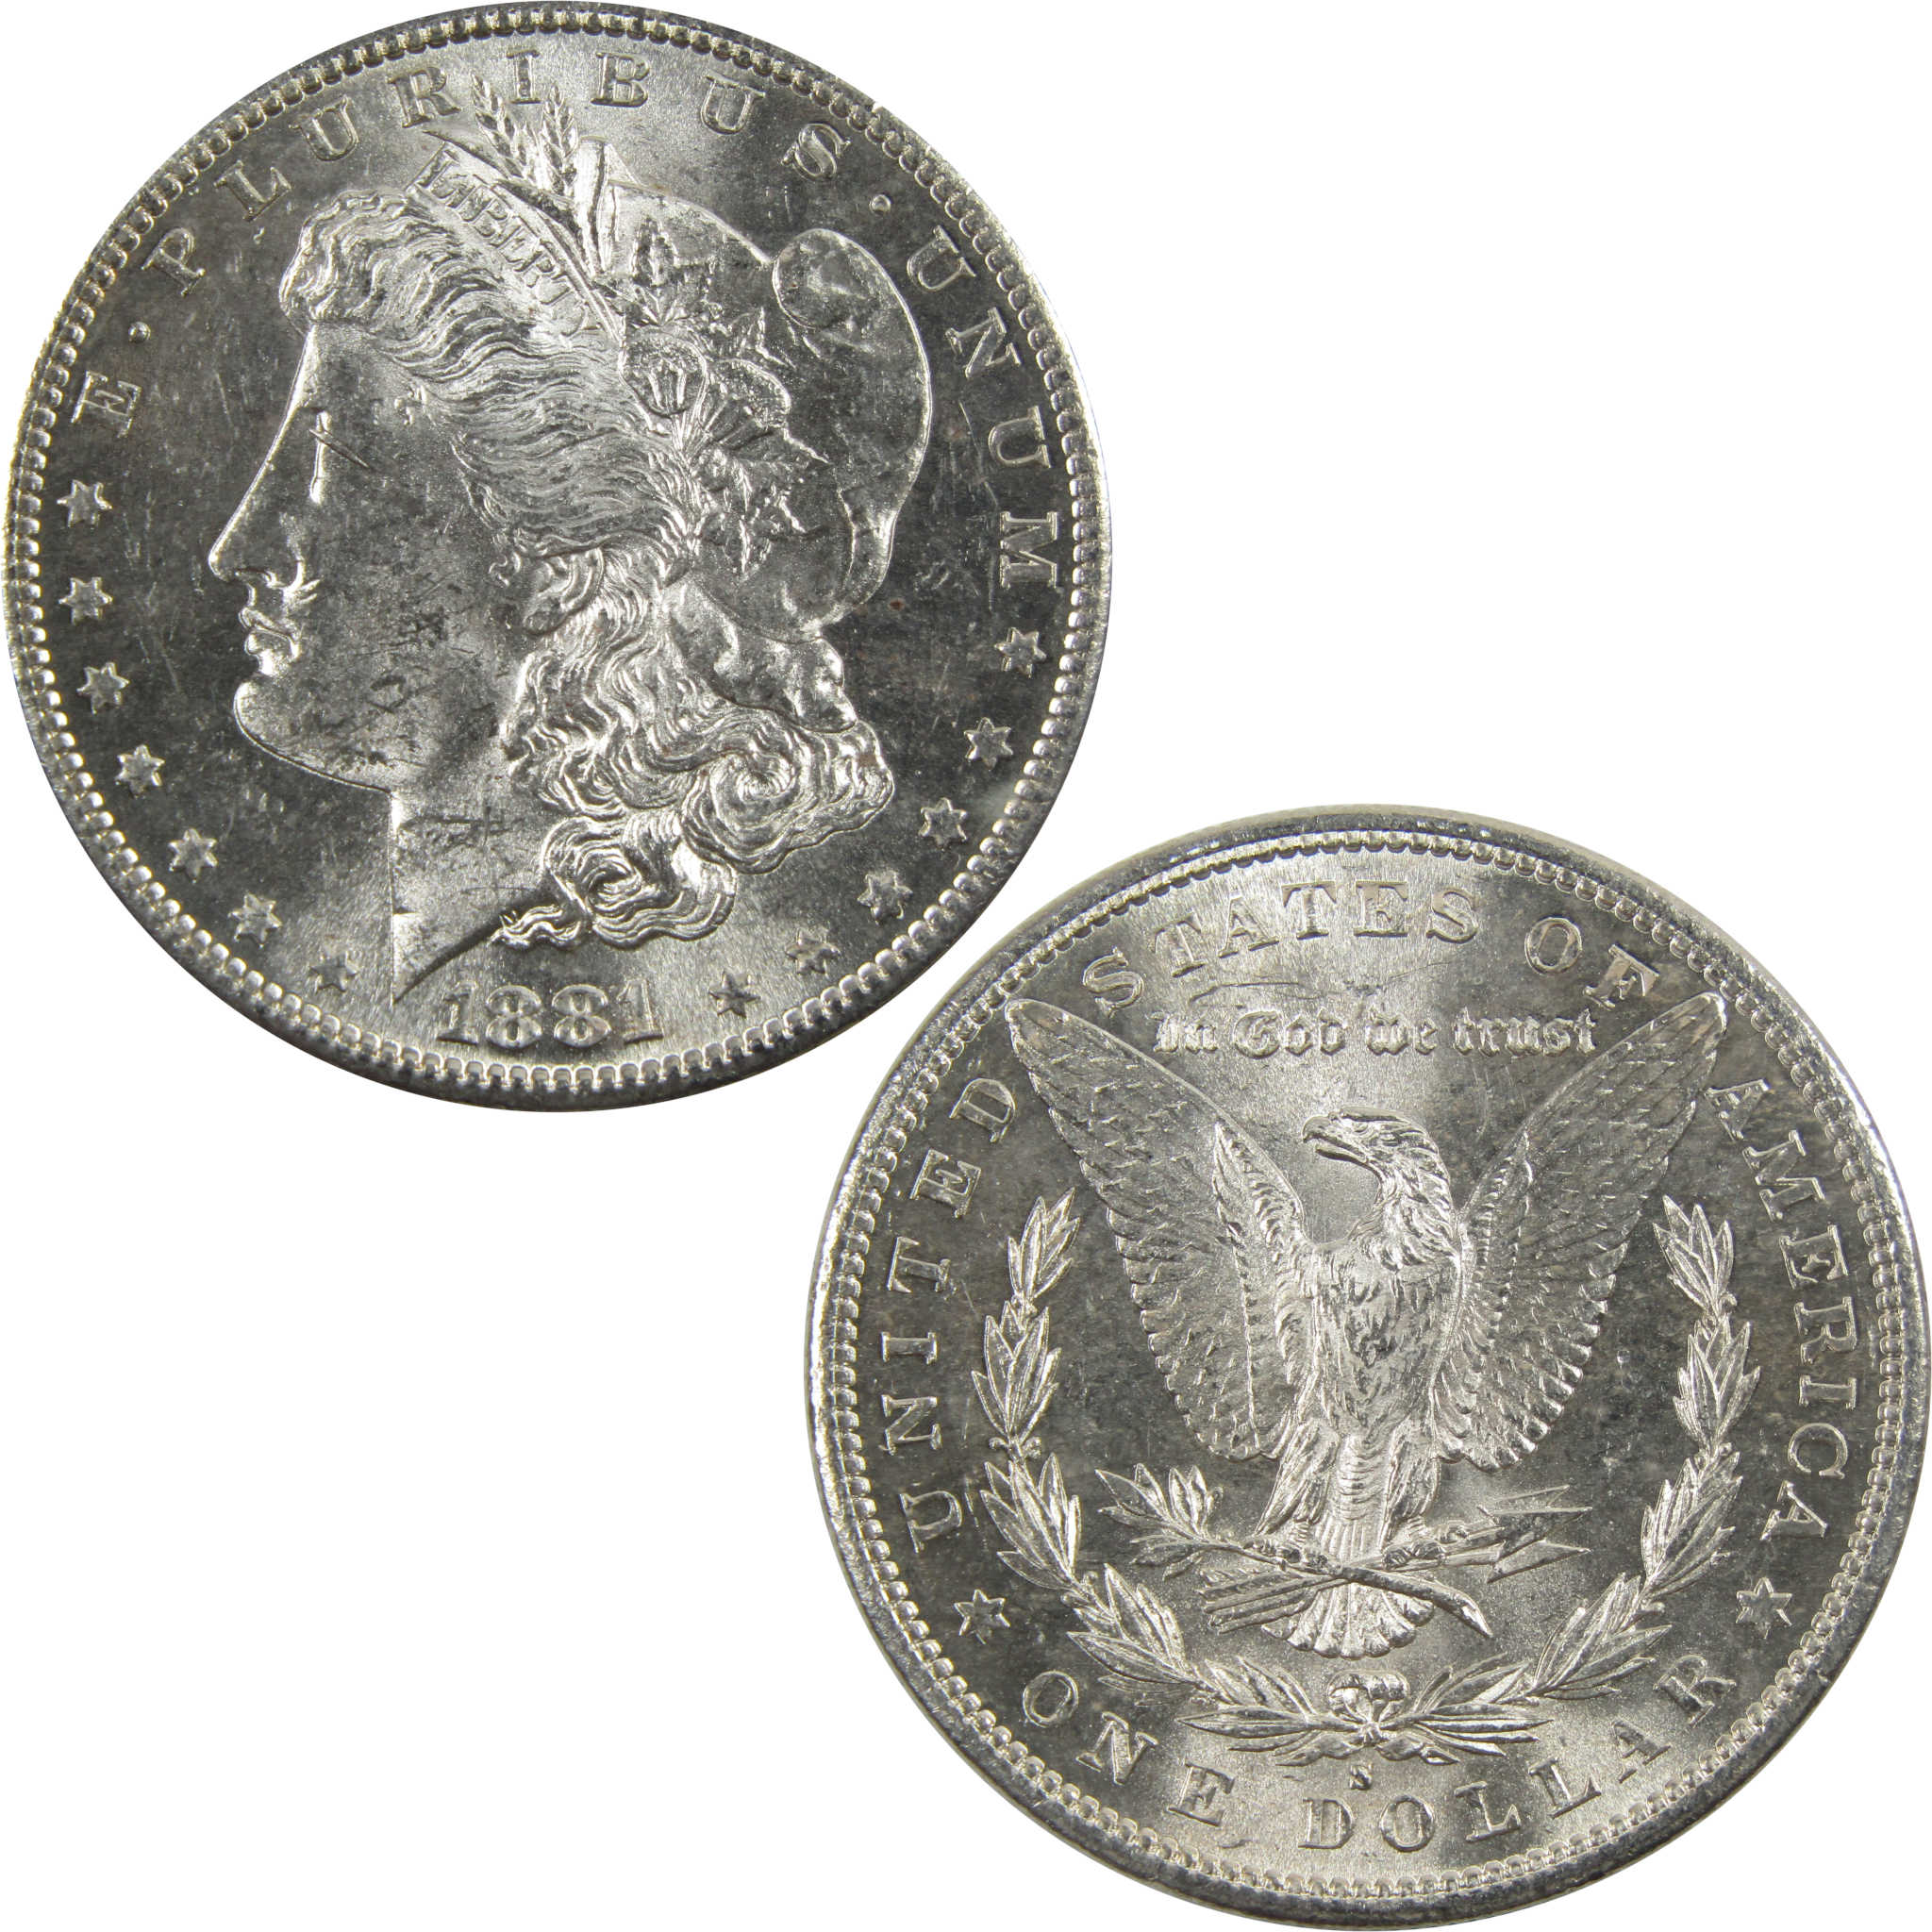 1881 S Morgan Dollar BU Uncirculated 90% Silver $1 Coin SKU:I5317 - Morgan coin - Morgan silver dollar - Morgan silver dollar for sale - Profile Coins &amp; Collectibles